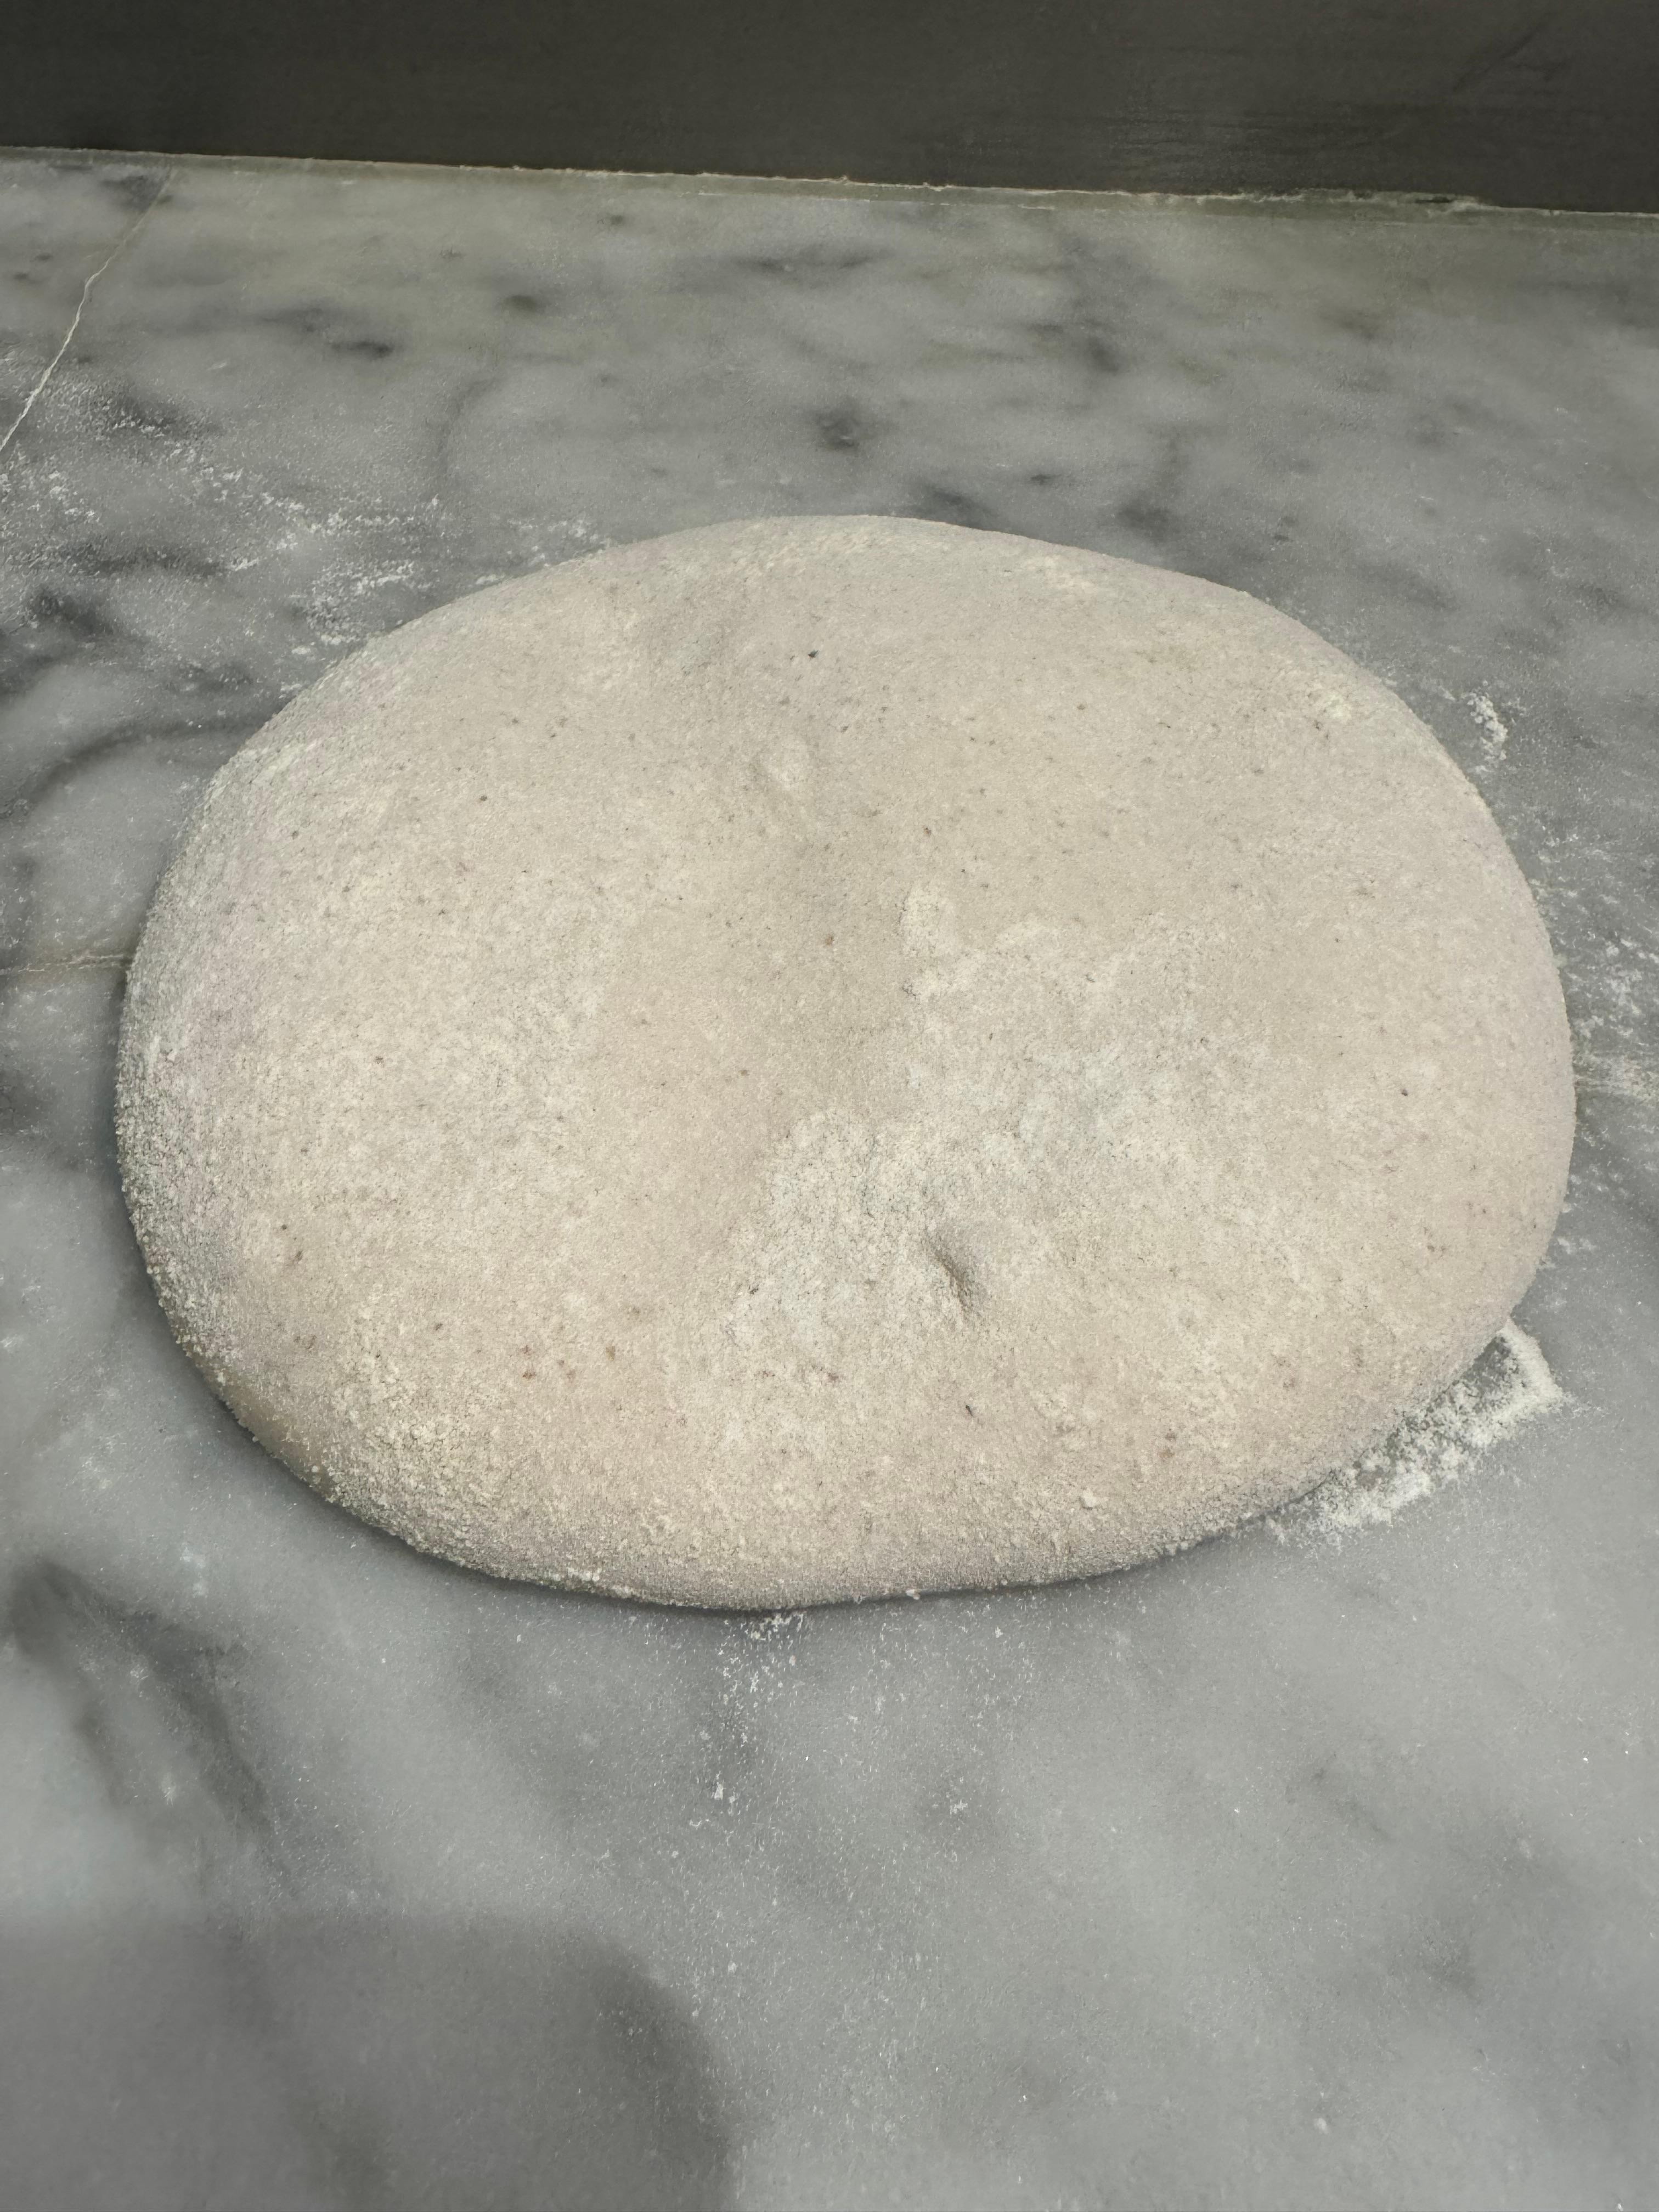 LG pizza dough